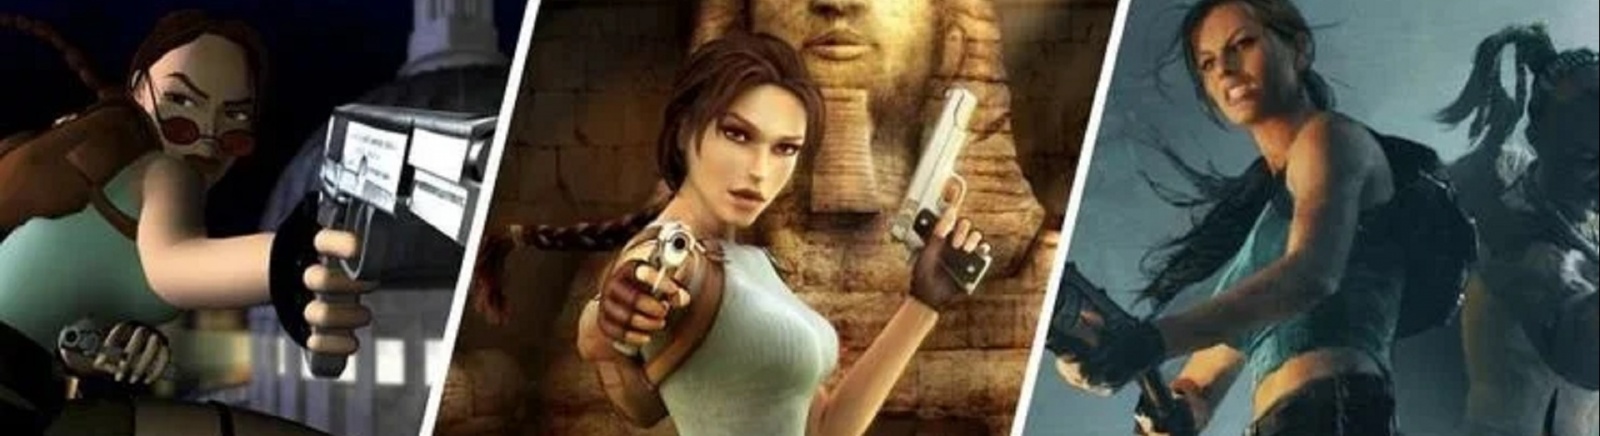 Дата выхода Tomb Raider Ultimate Experience  на PC, PS4 и Xbox One в России и во всем мире